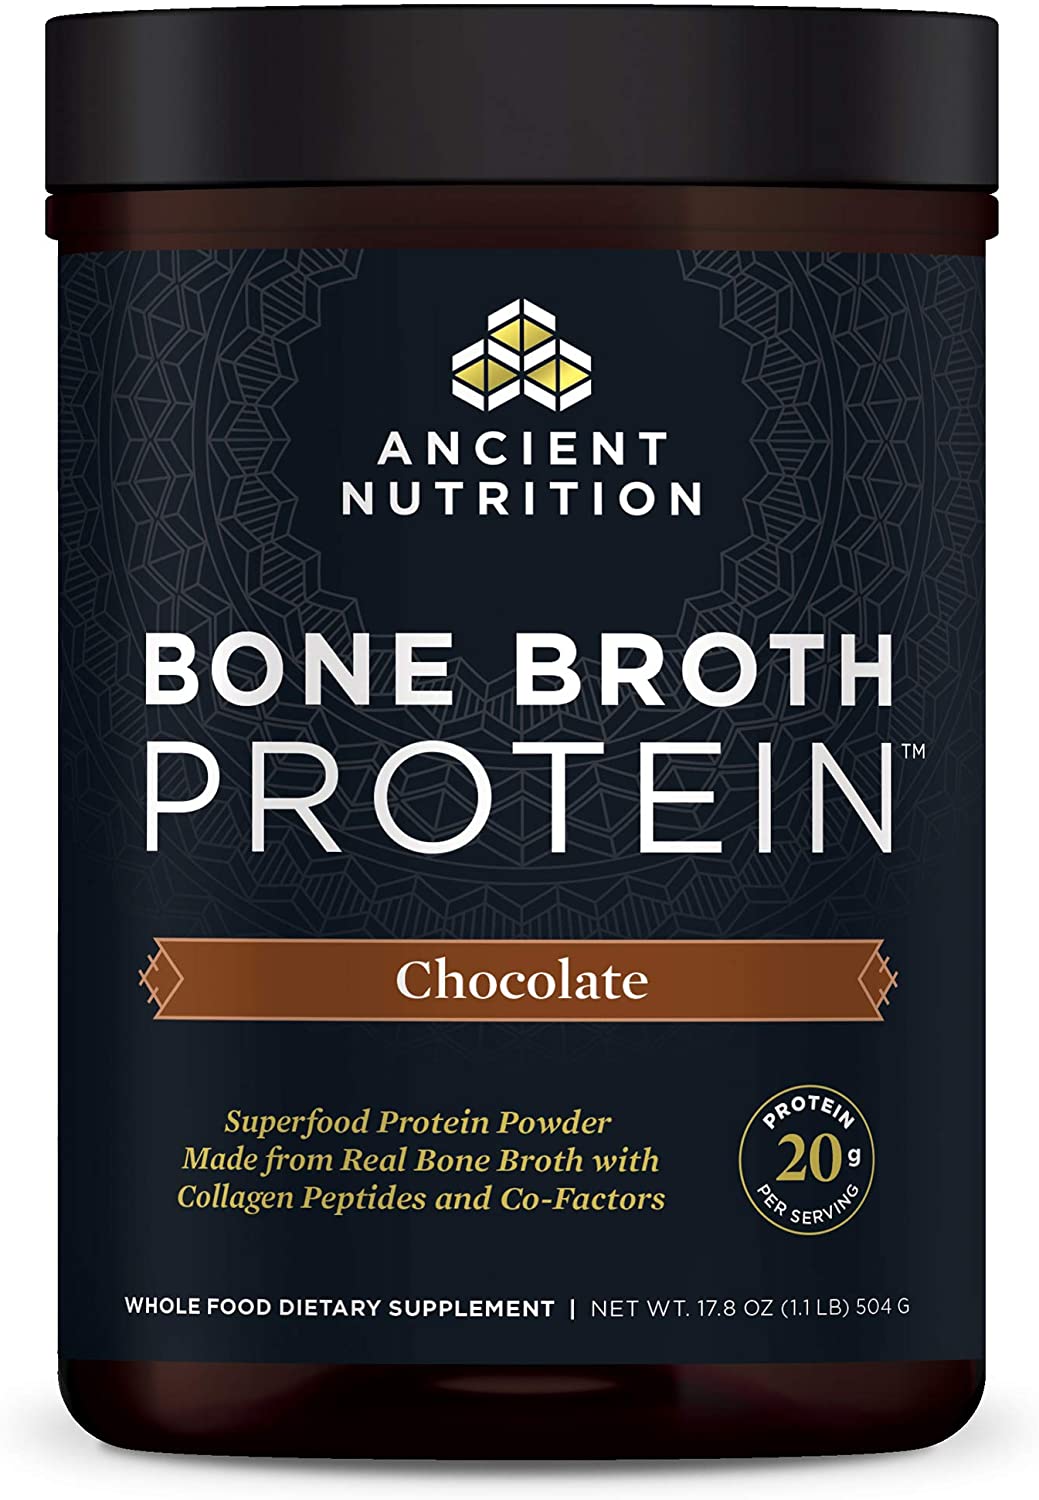 Ranking the best bone broth protein powders of 2022